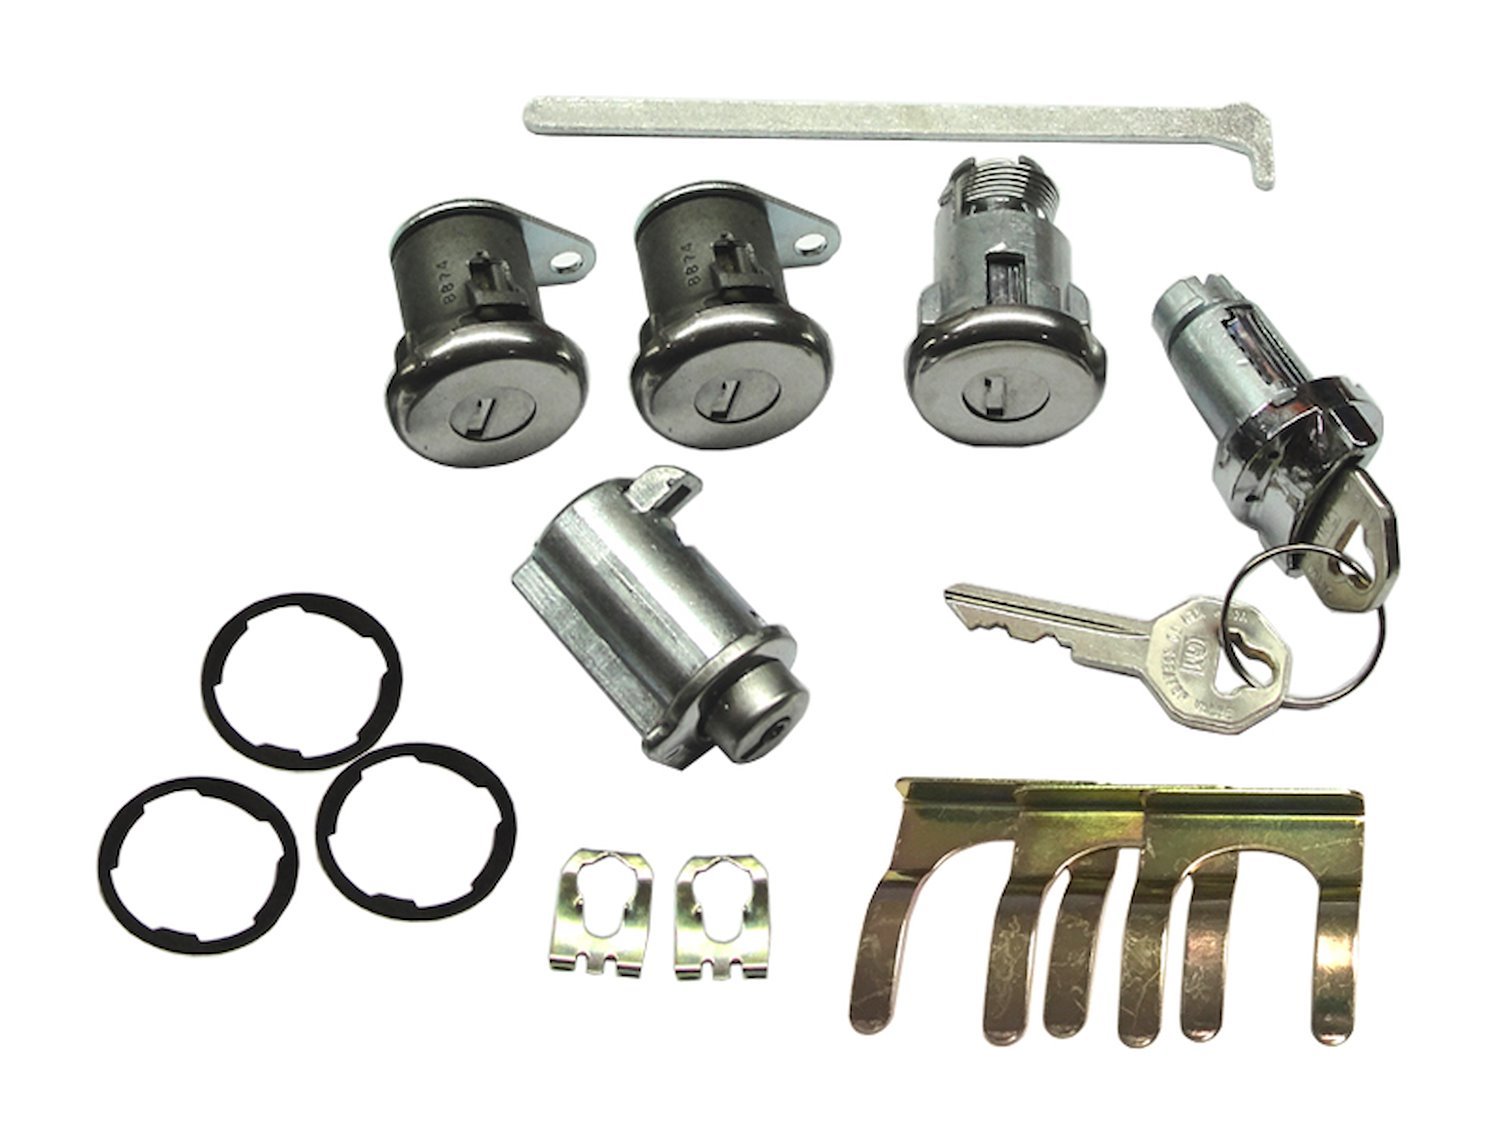 Ignition, Door, Trunk & Glovebox Lock Set Fits Select 1961-1962 GM Models With Short Door Cylinders [Original Octagon]